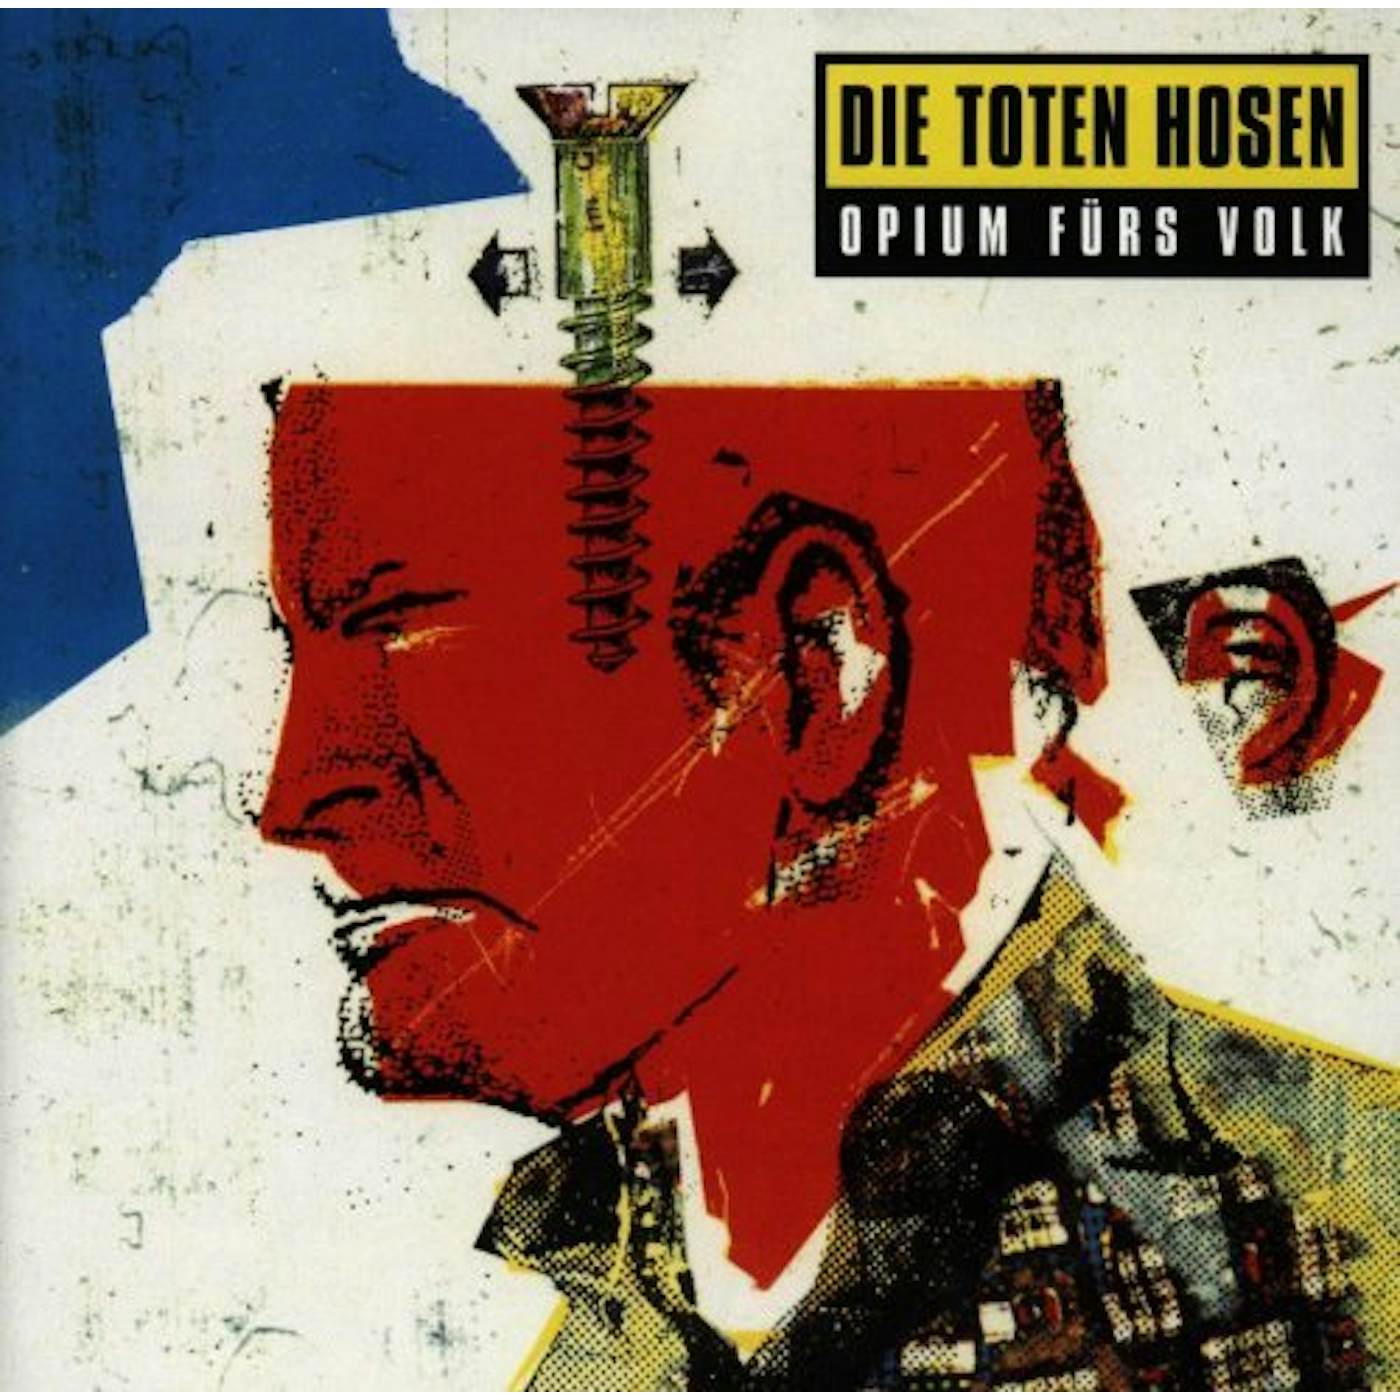 Die Toten Hosen OPIUM FUR'S VOLK CD